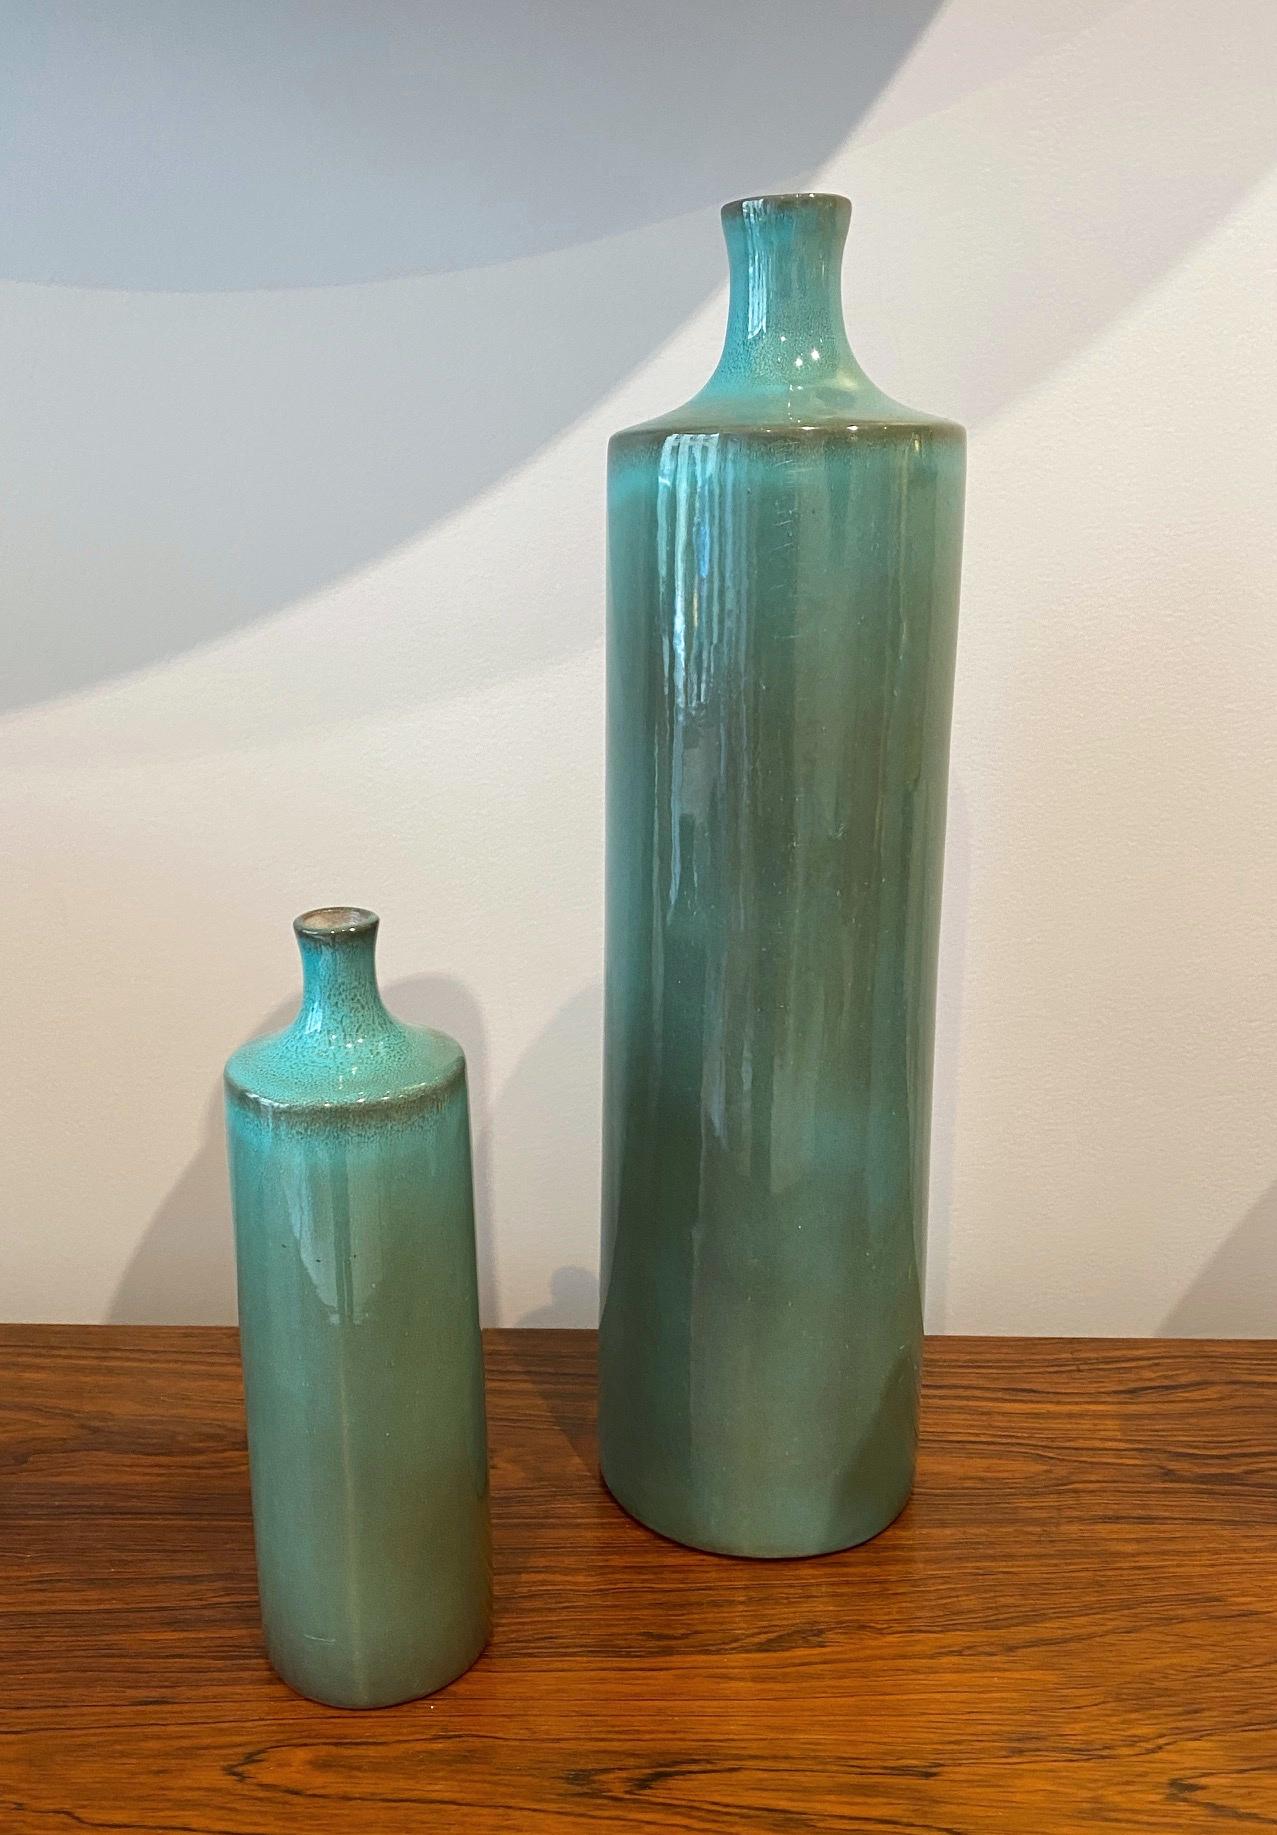 Shiny green set of 2 bottles / vases by Jacques et Dani Ruelland, 1960s.
Signed on back
Dimensions:
H 40 cm / H 21 cm.